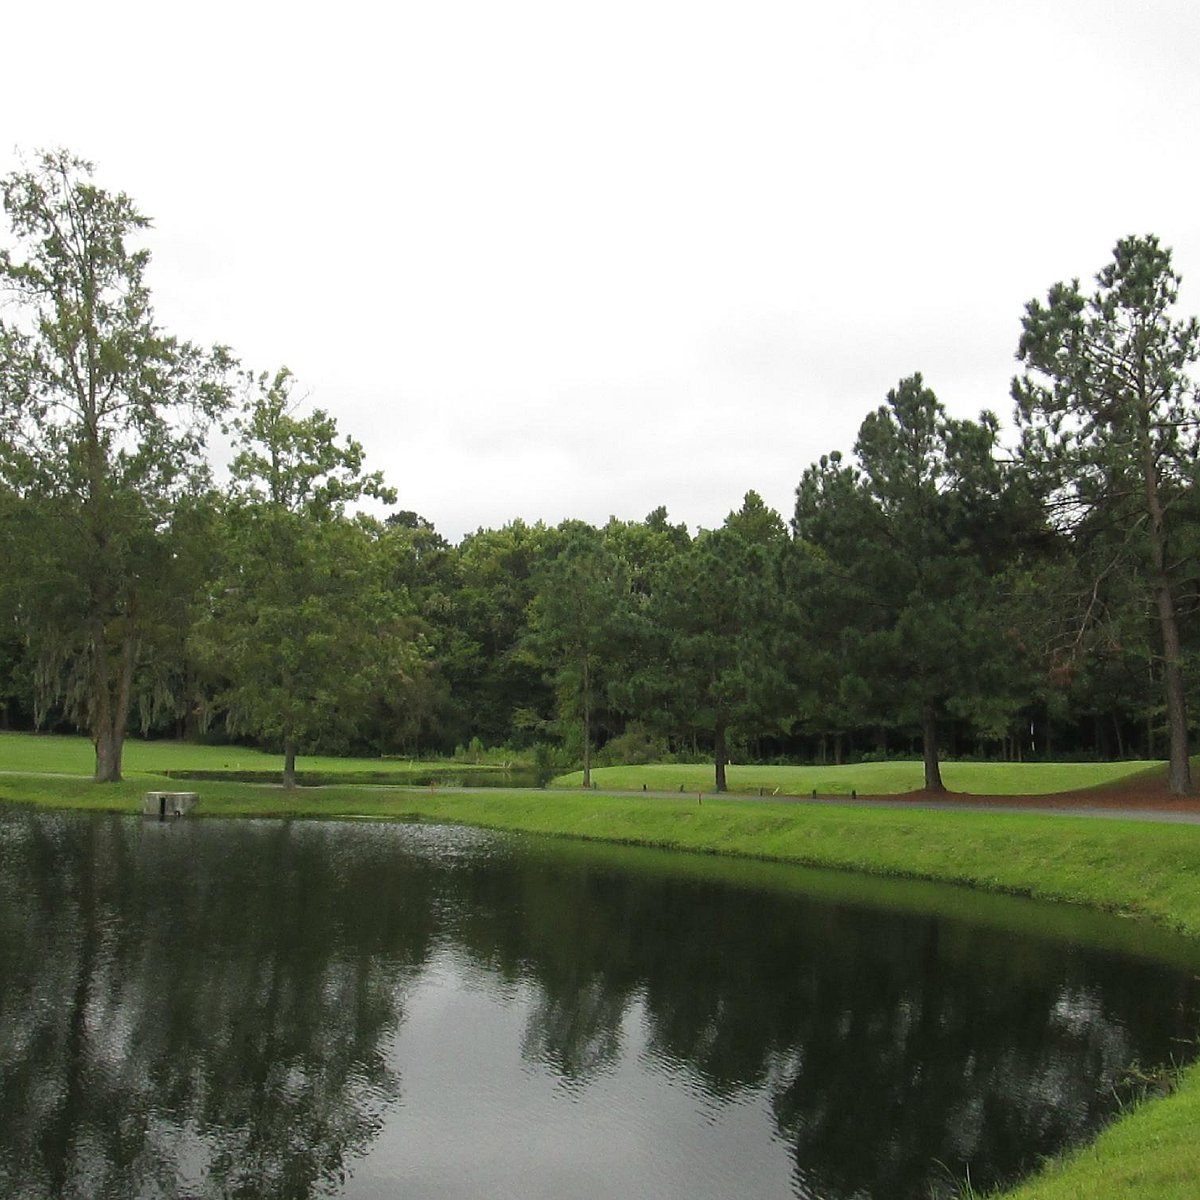 Crowfield Golf Club - Goose Creek, SC